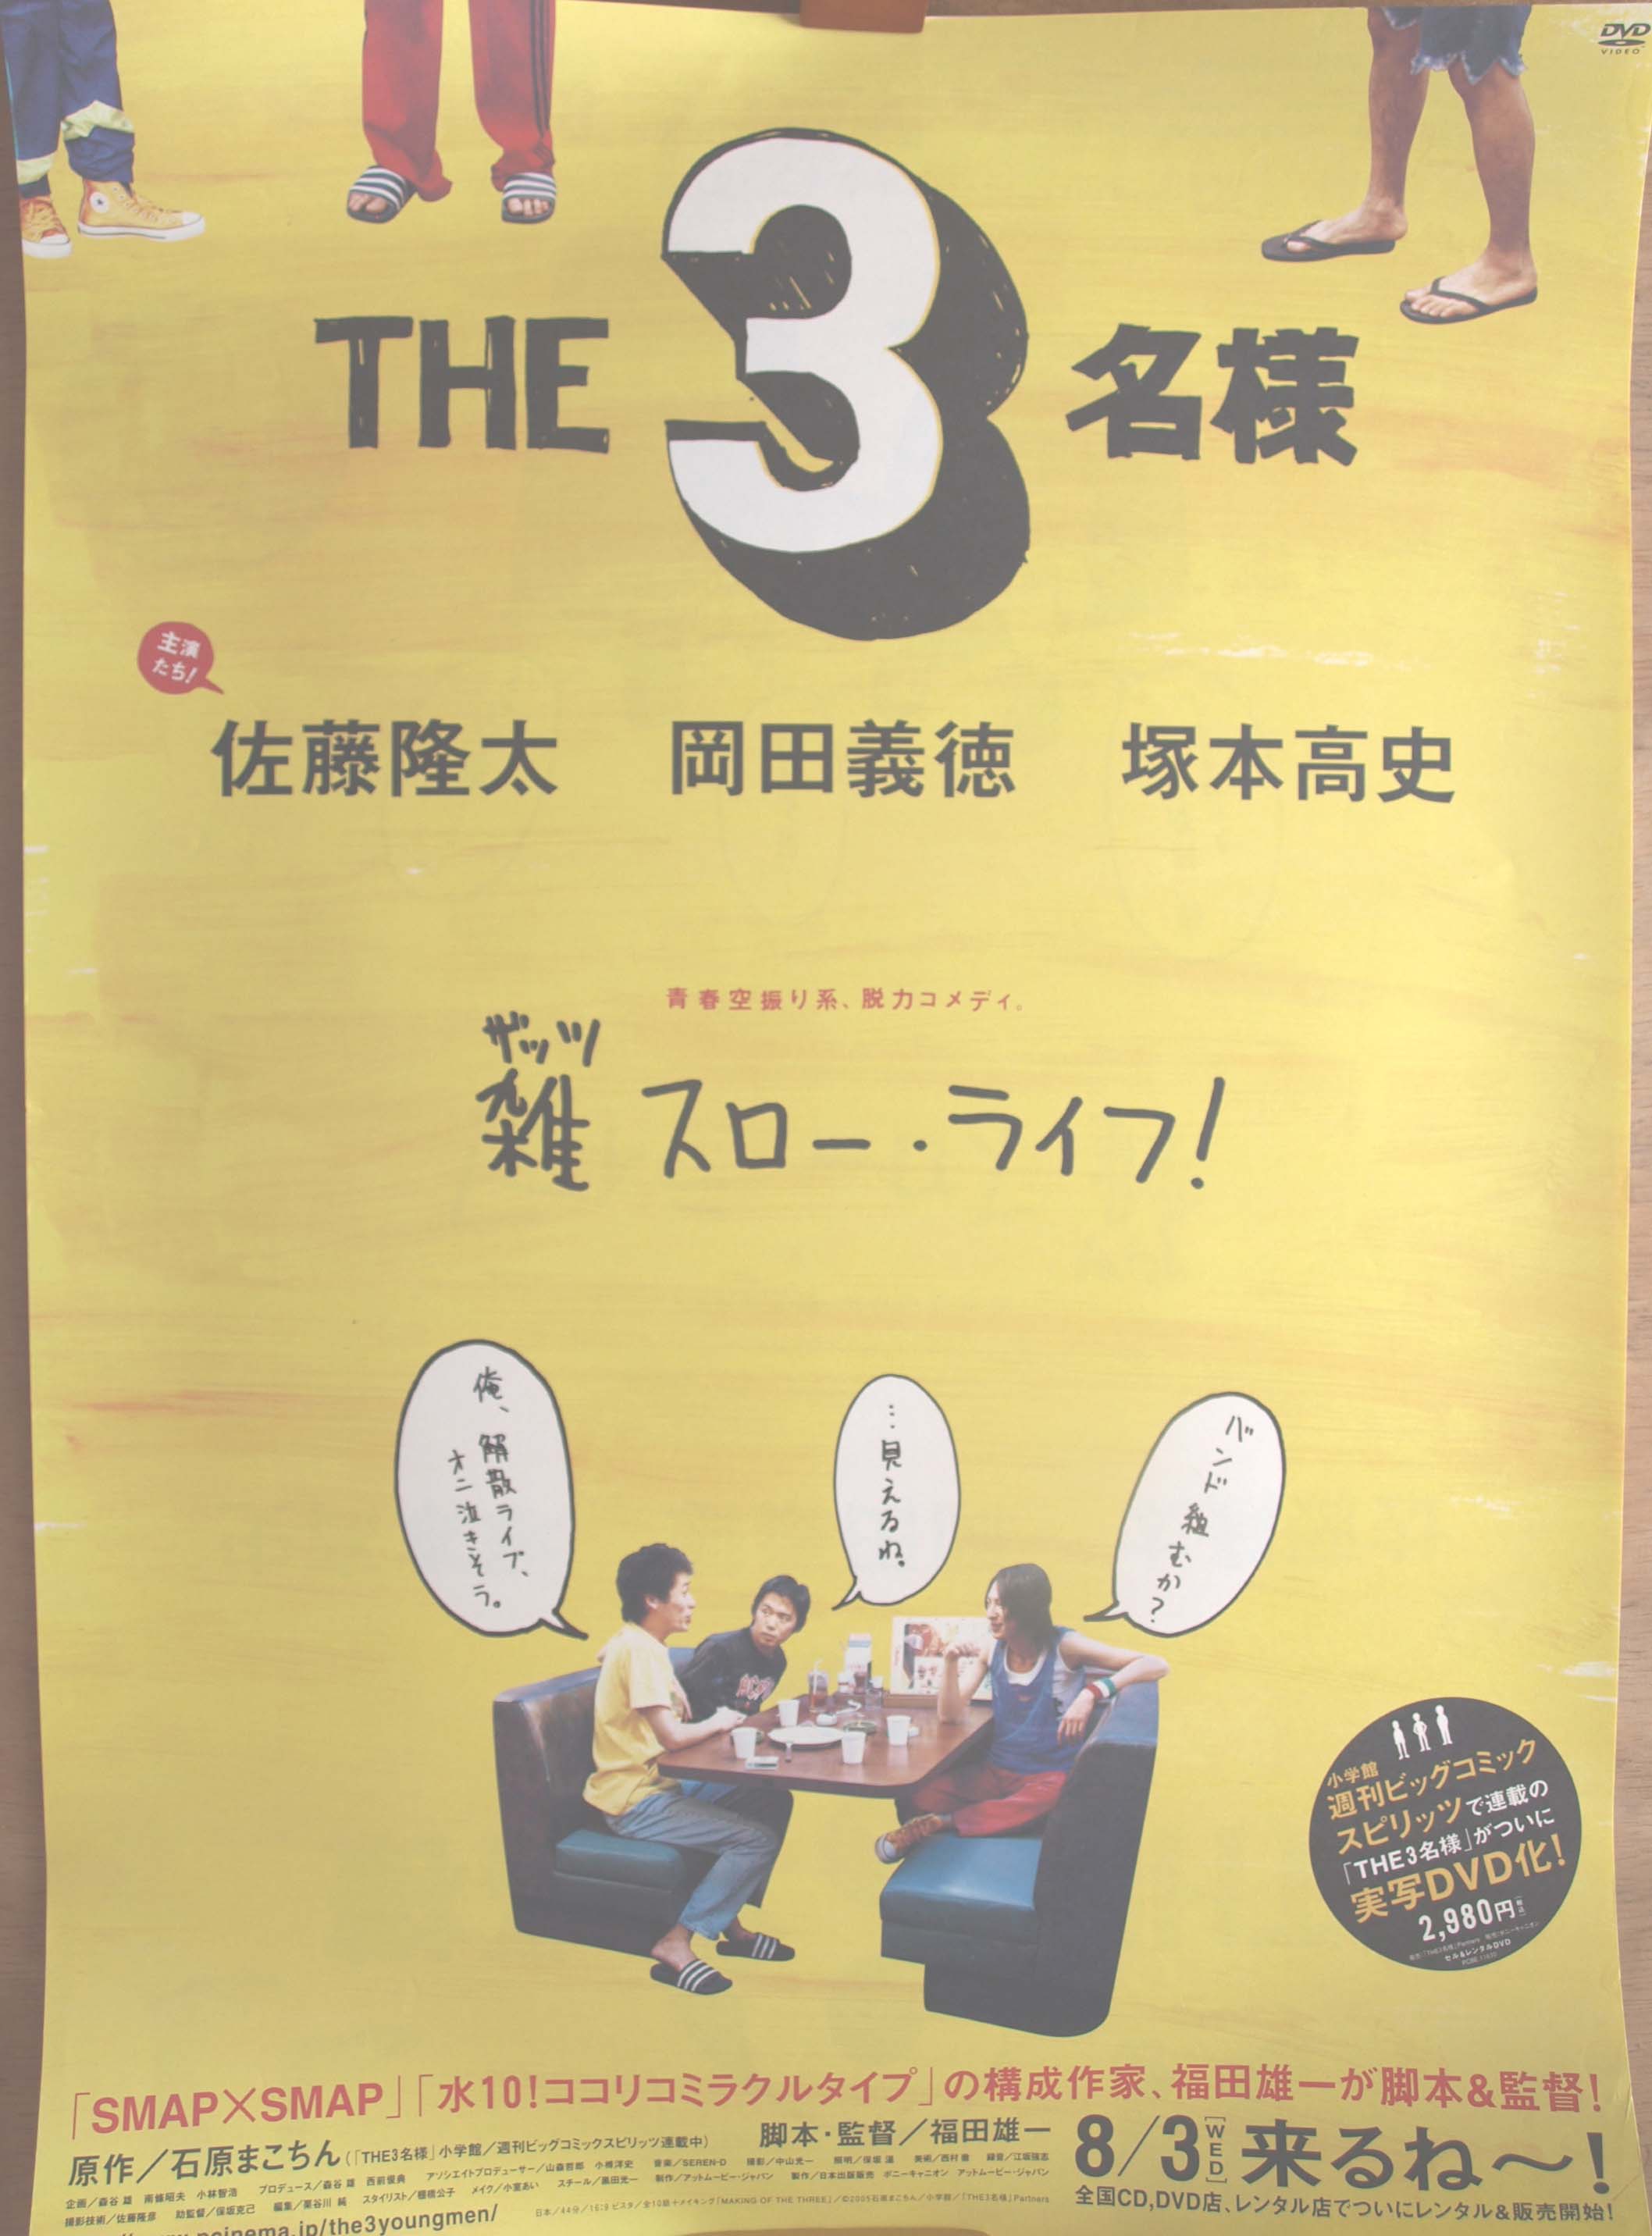 THE3名様 （佐藤隆太 岡田義徳 塚本高史）のポスター